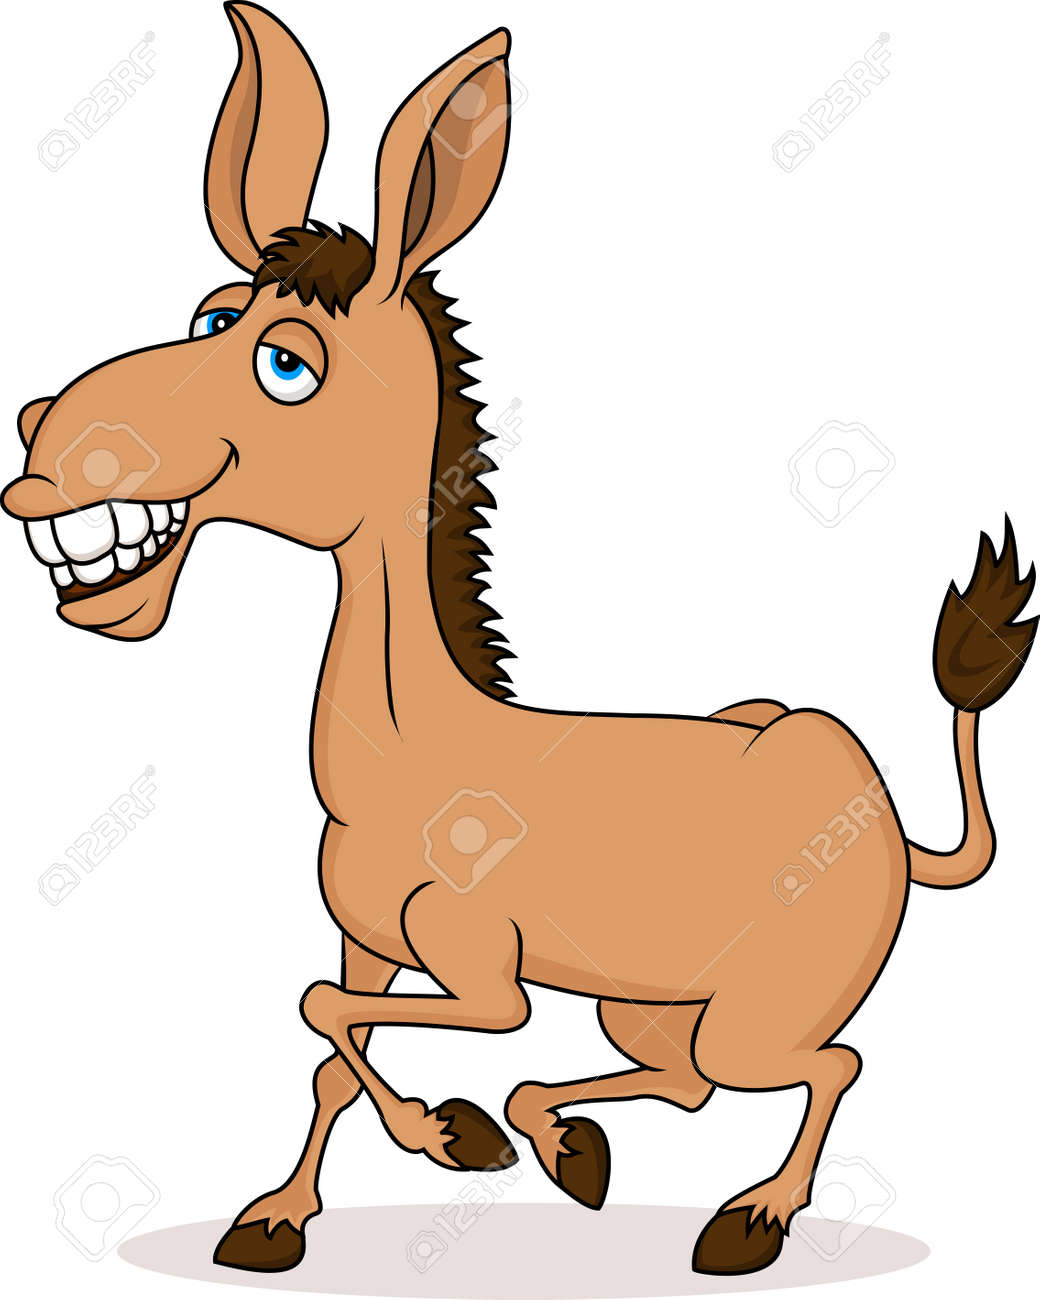 (http://previews.123rf.com/images/idesign2000/idesign20001205/idesign2000120500481/13780095-Smiling-donkey-cartoon--Stock-Vector-mule.jpg)